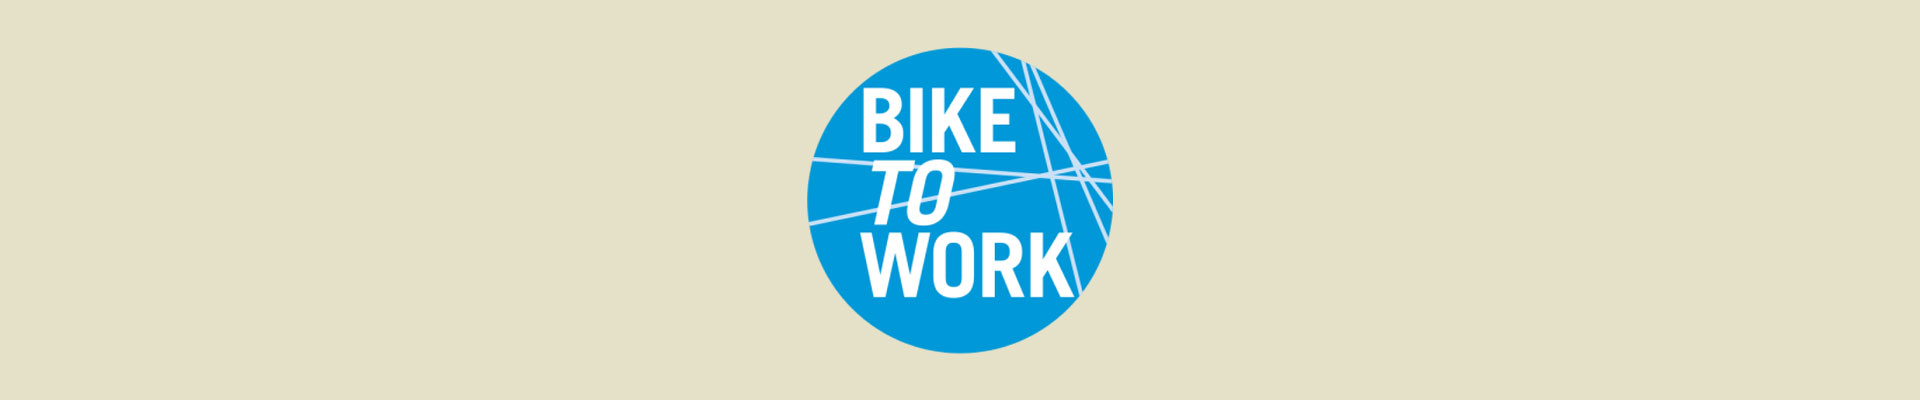 The logo of Bike to Work